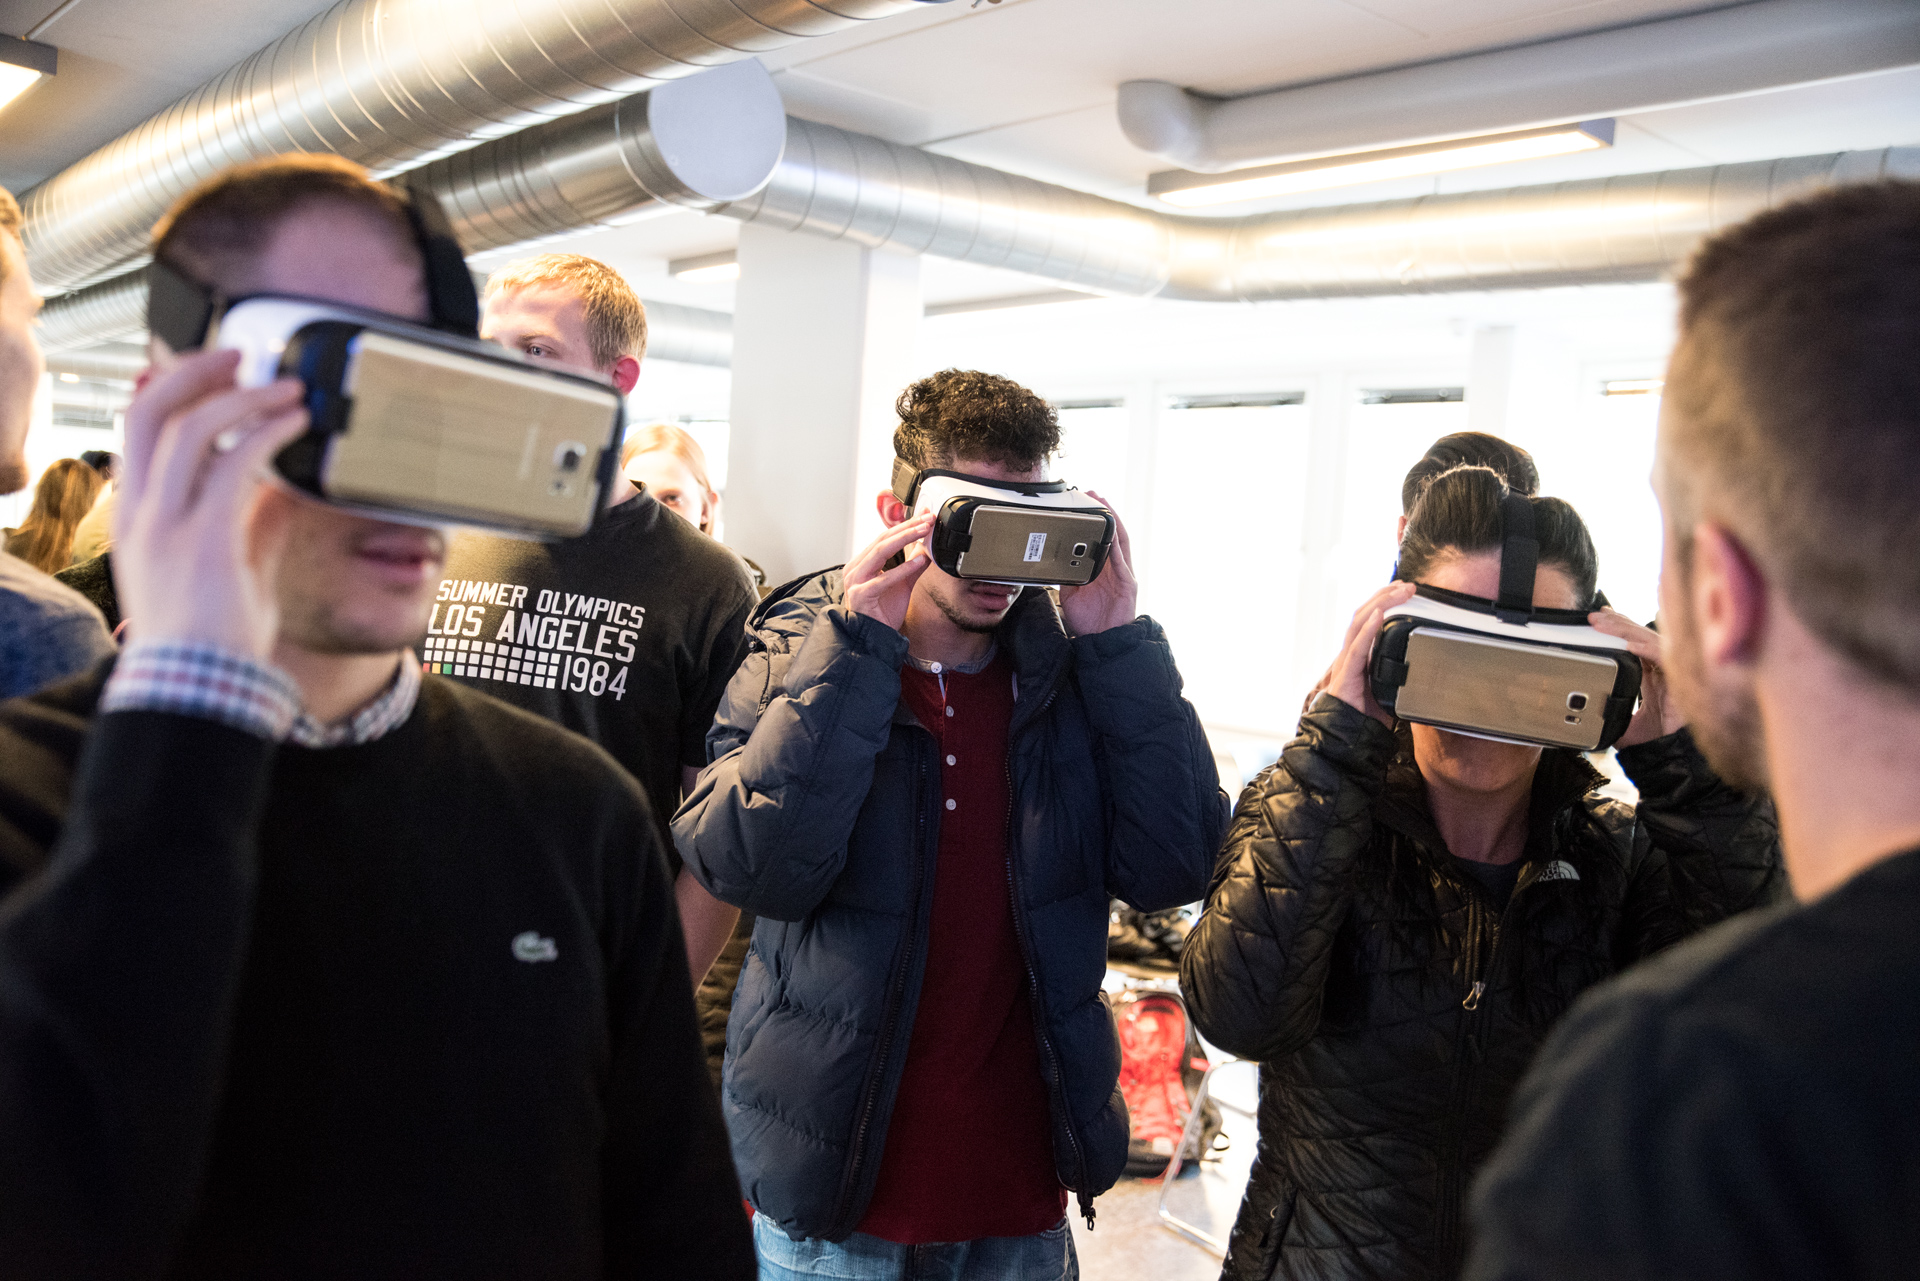 Flere studerende fra Cphbusiness står med virtual reality briller på